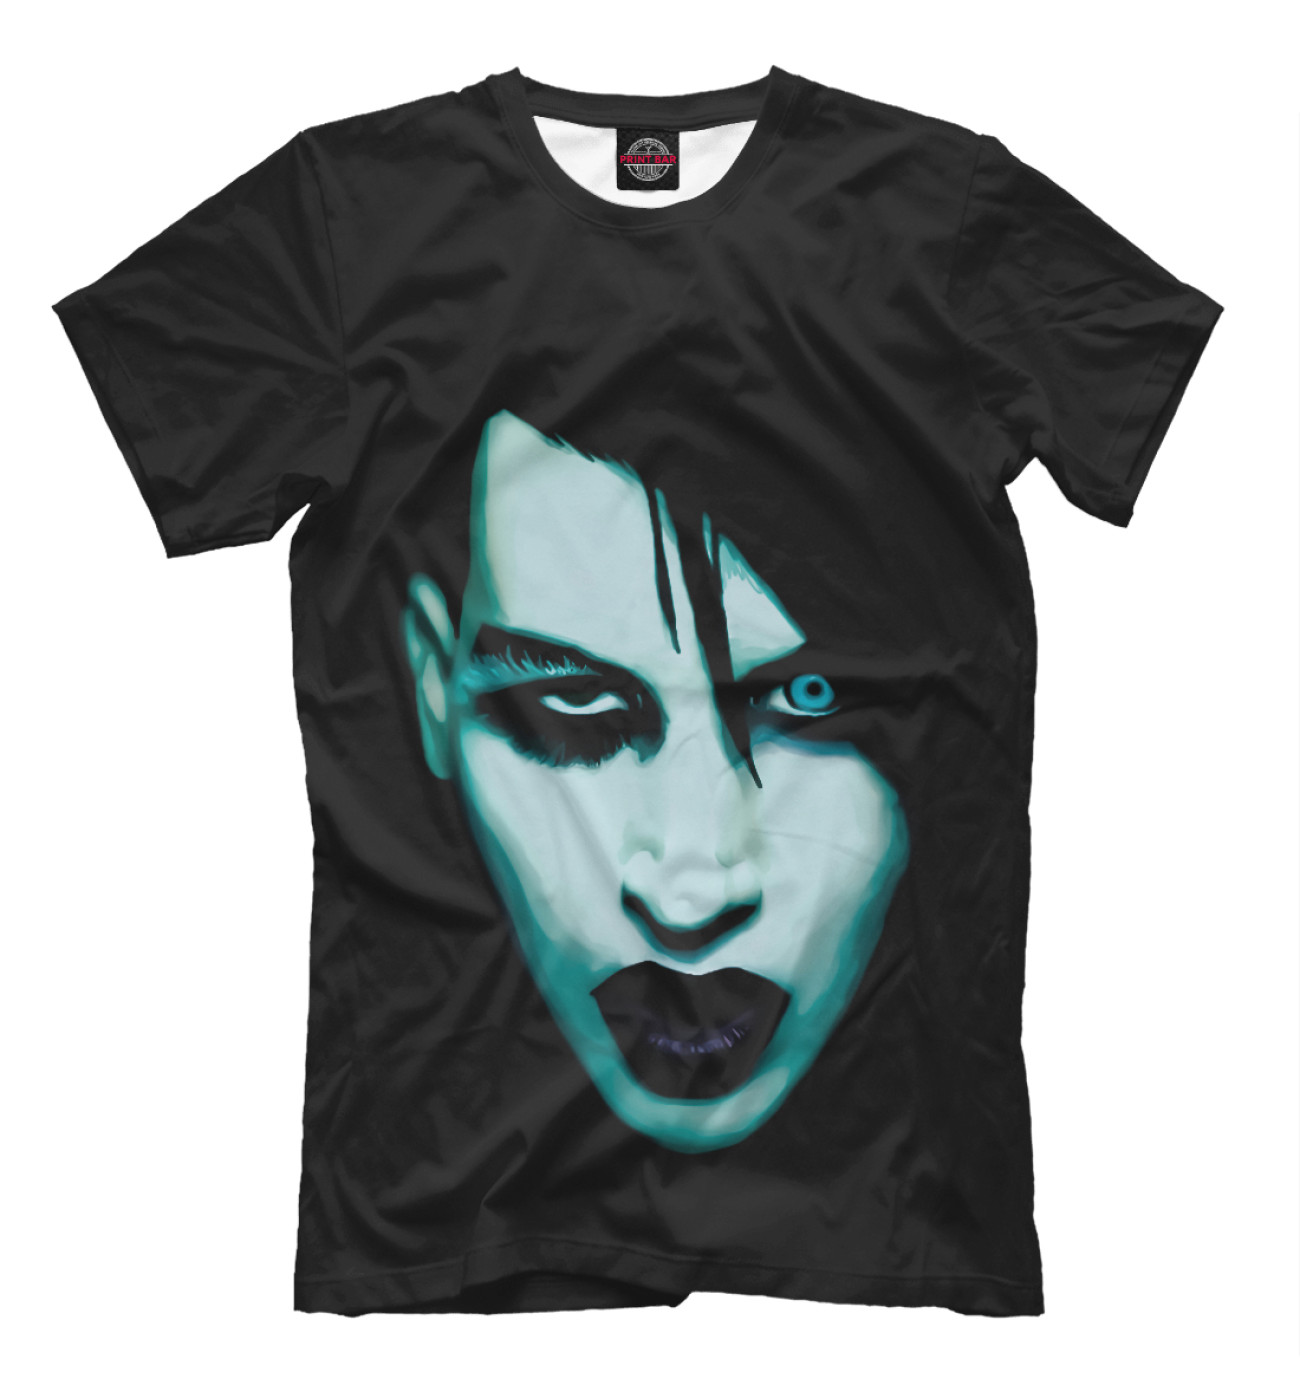 Мужская Футболка Marilyn Manson, артикул: MRM-505579-fut-2